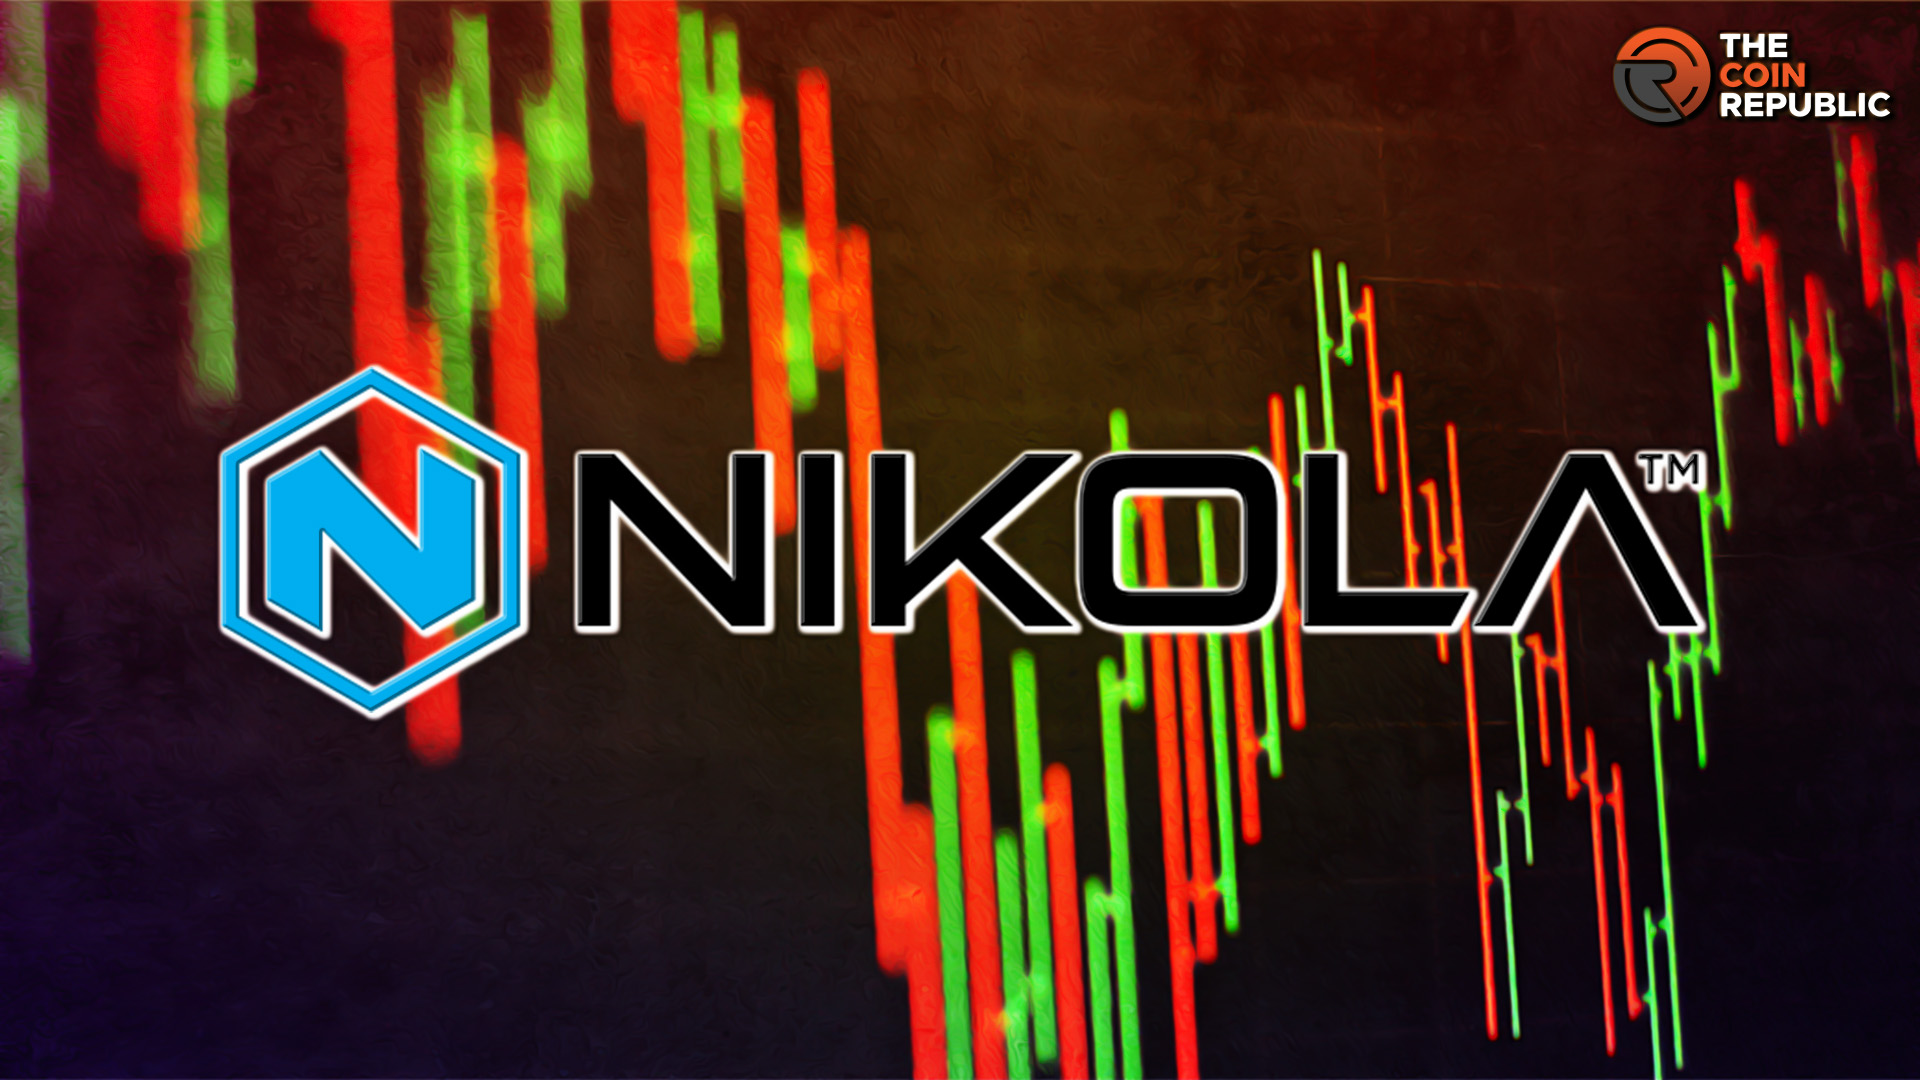 Nikola Price Analysis: NKLA Stock Heading Towards $3; Buy or Sell? 